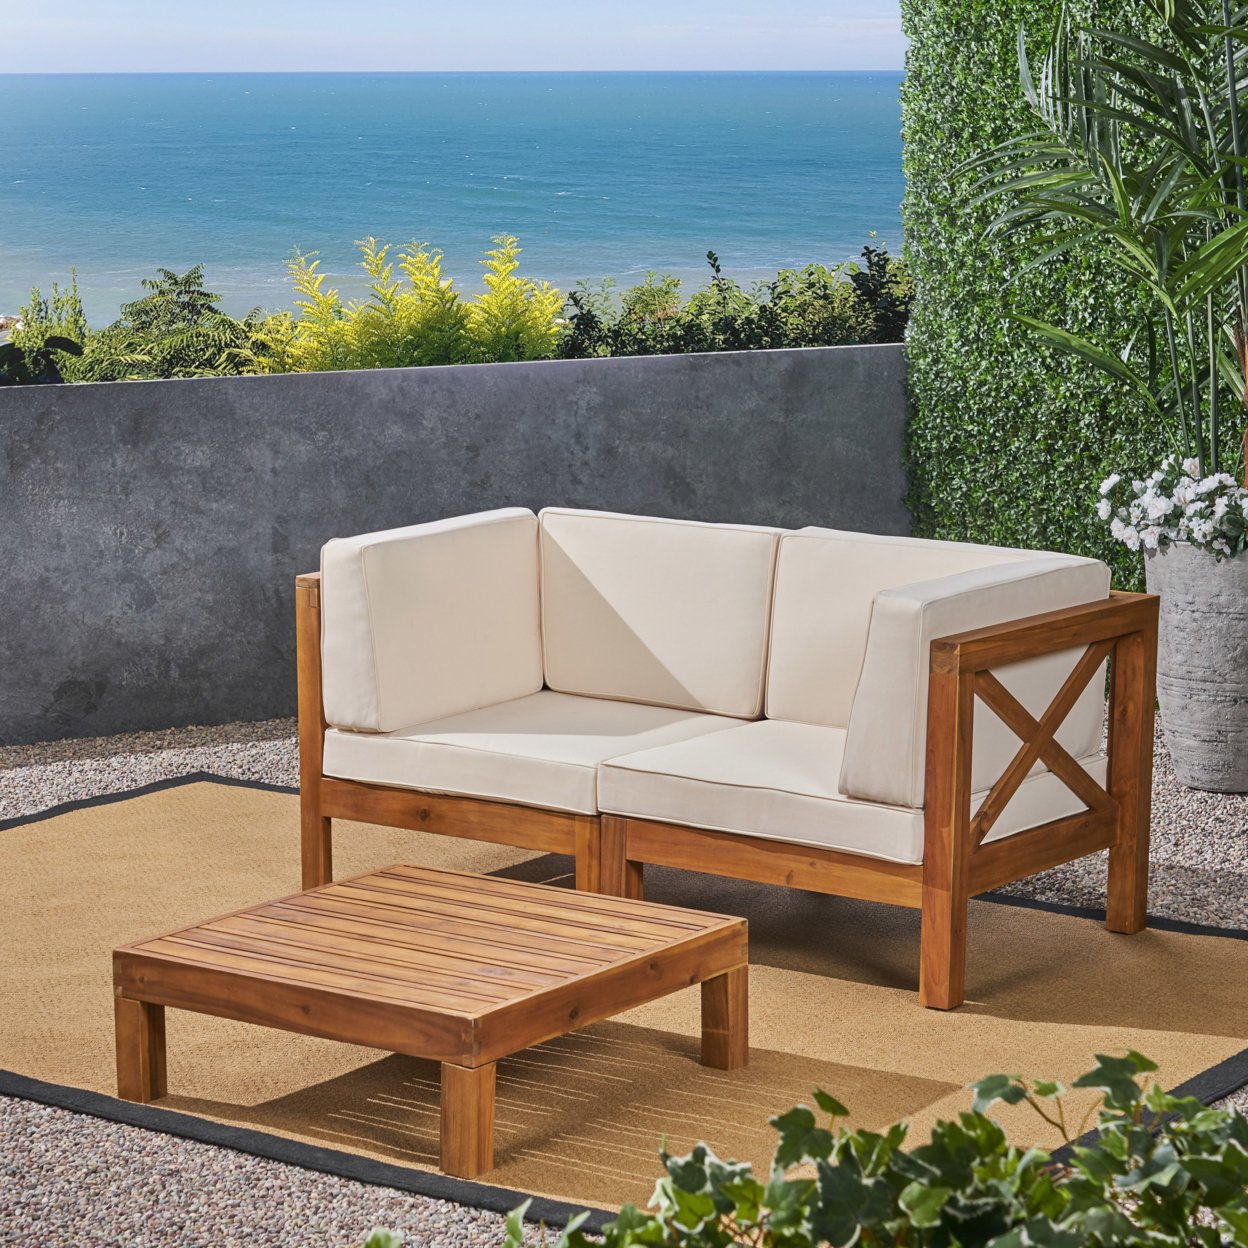 Brava Outdoor Modular Acacia Wood Sofa With Cushions And Coffee Table Set - Teak Finish + Beige